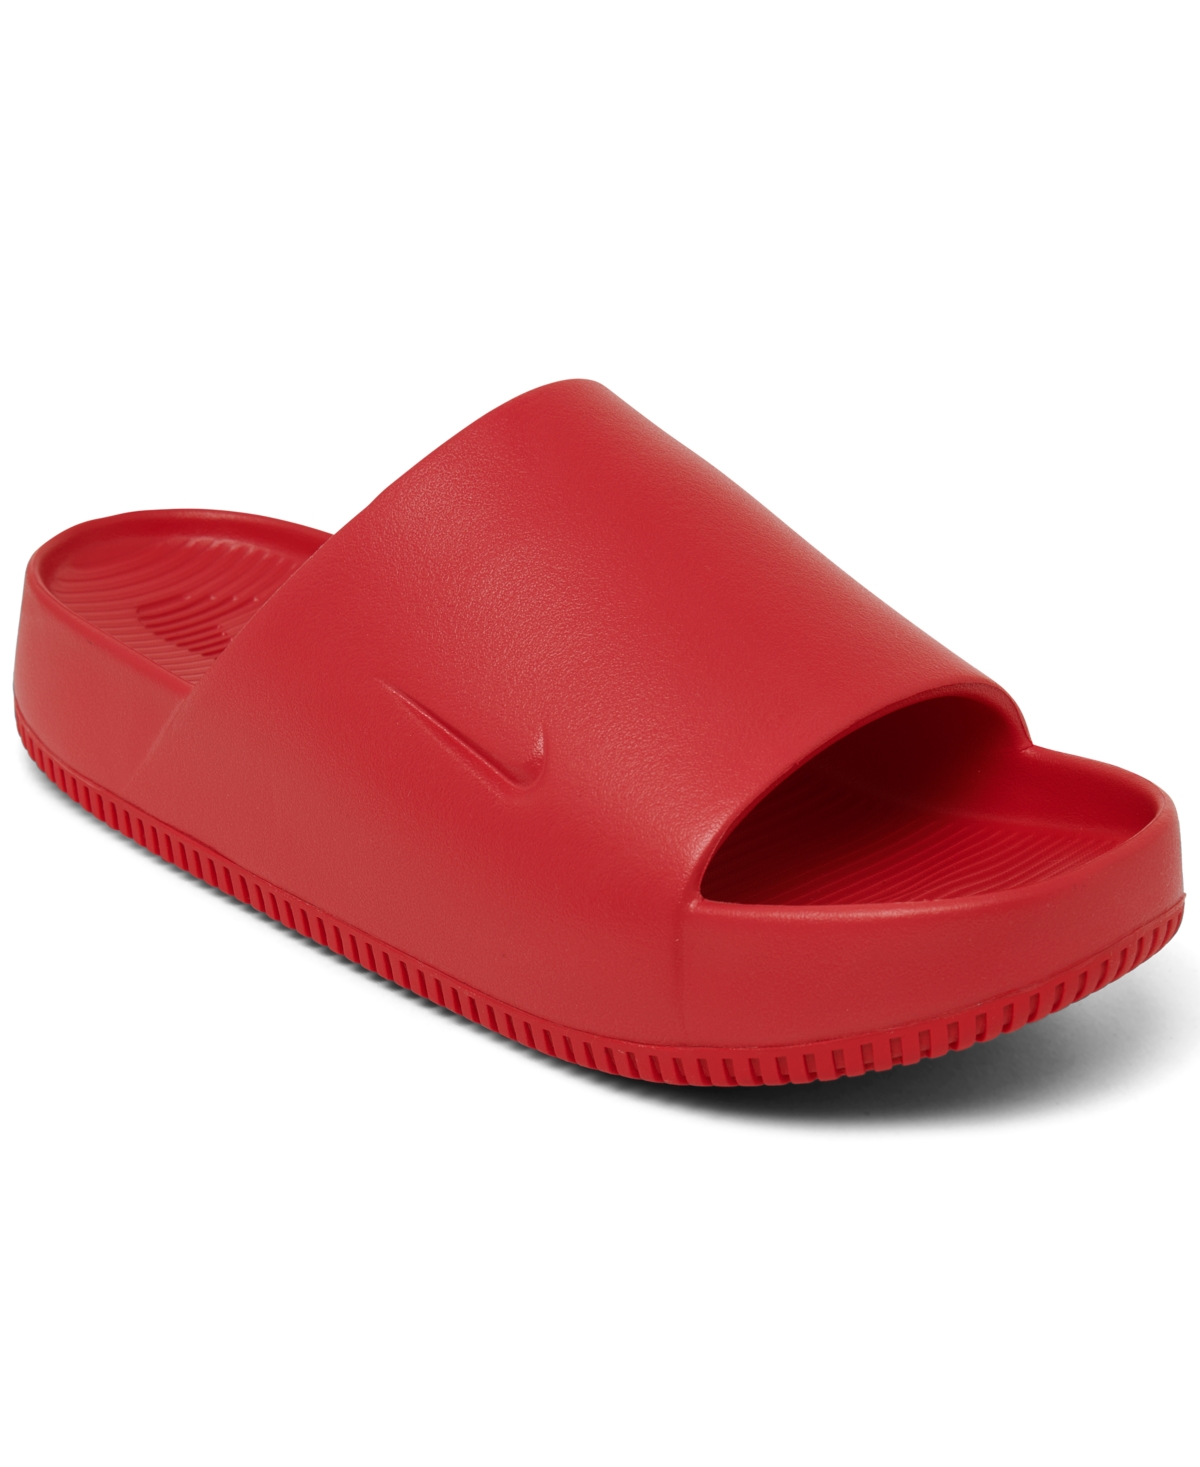 Men's Calm Slide Sandals from Finish Line - University Red, Red